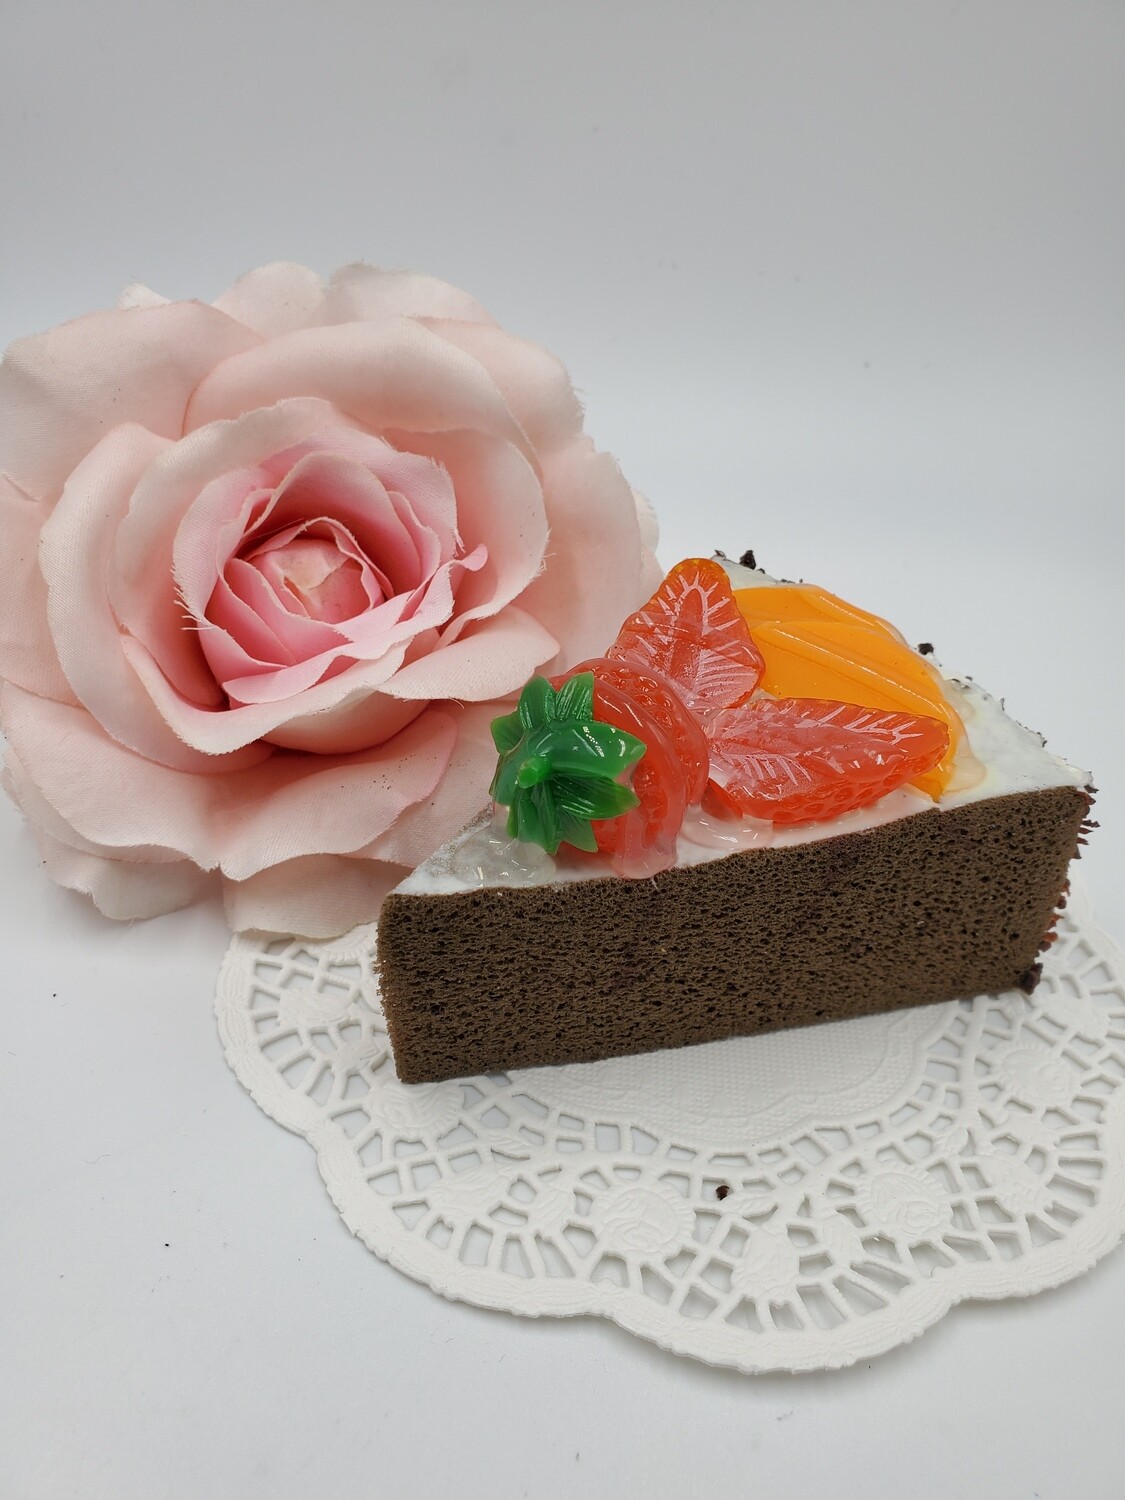 Magnet: Cake Slice "Choc/ Strawberry"